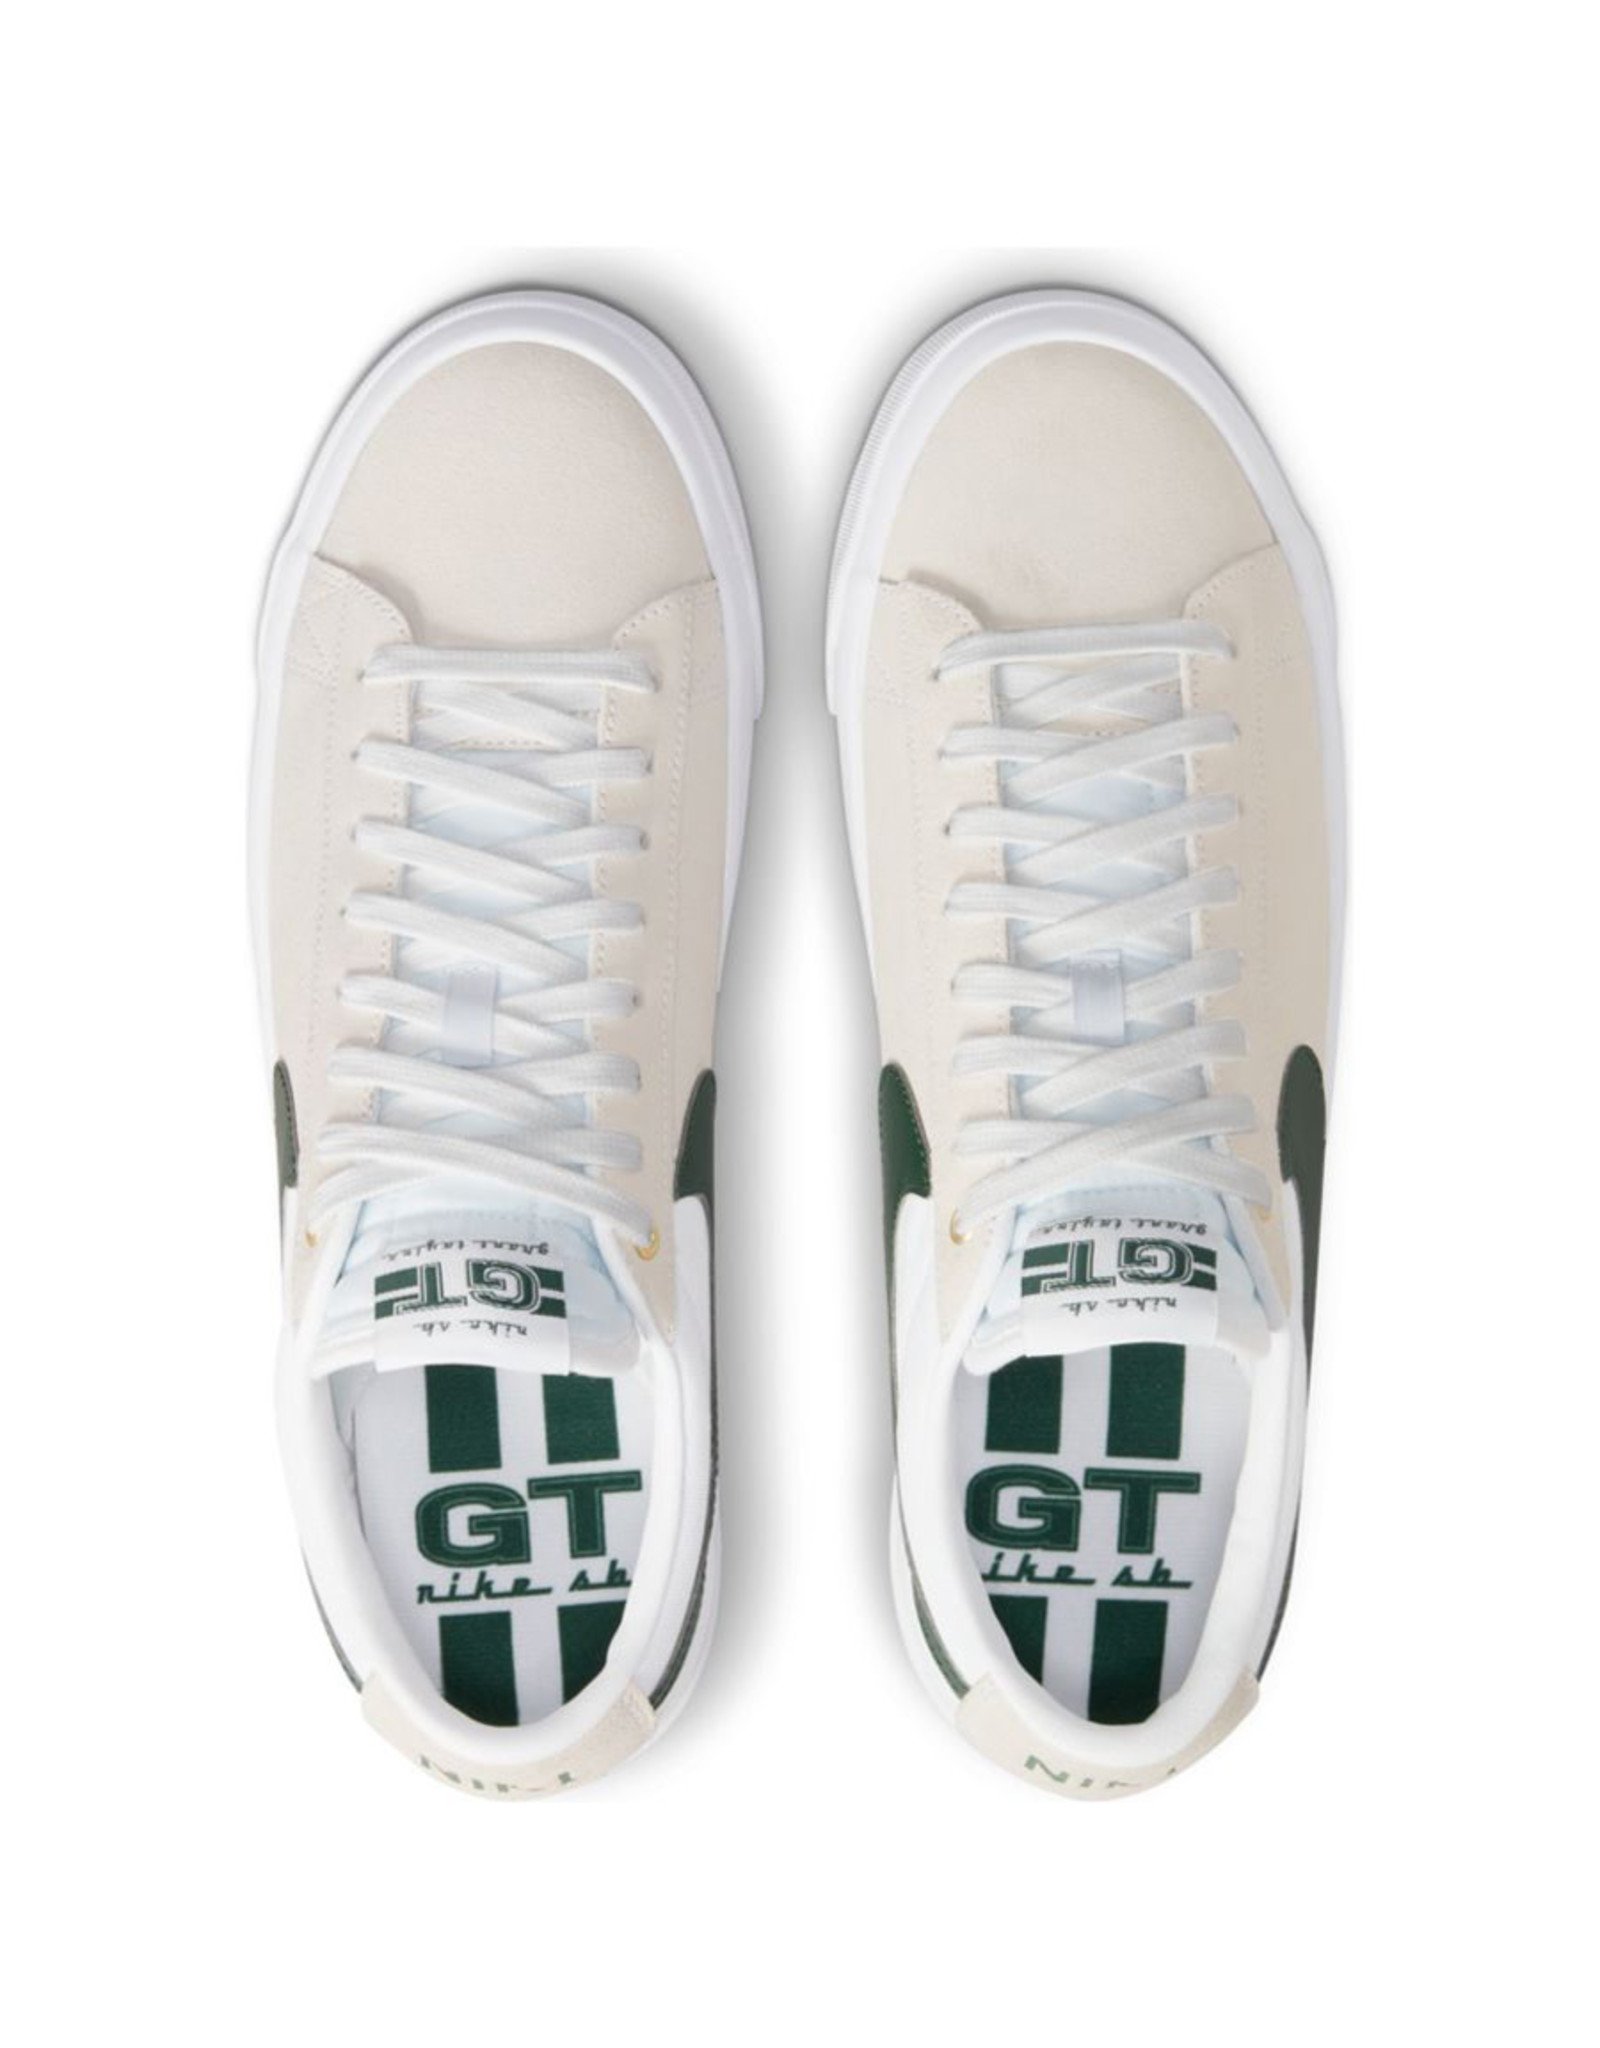 Nike Sb Shoe Zoom Blazer Low Gt White Dark Green Stix Ride Shop